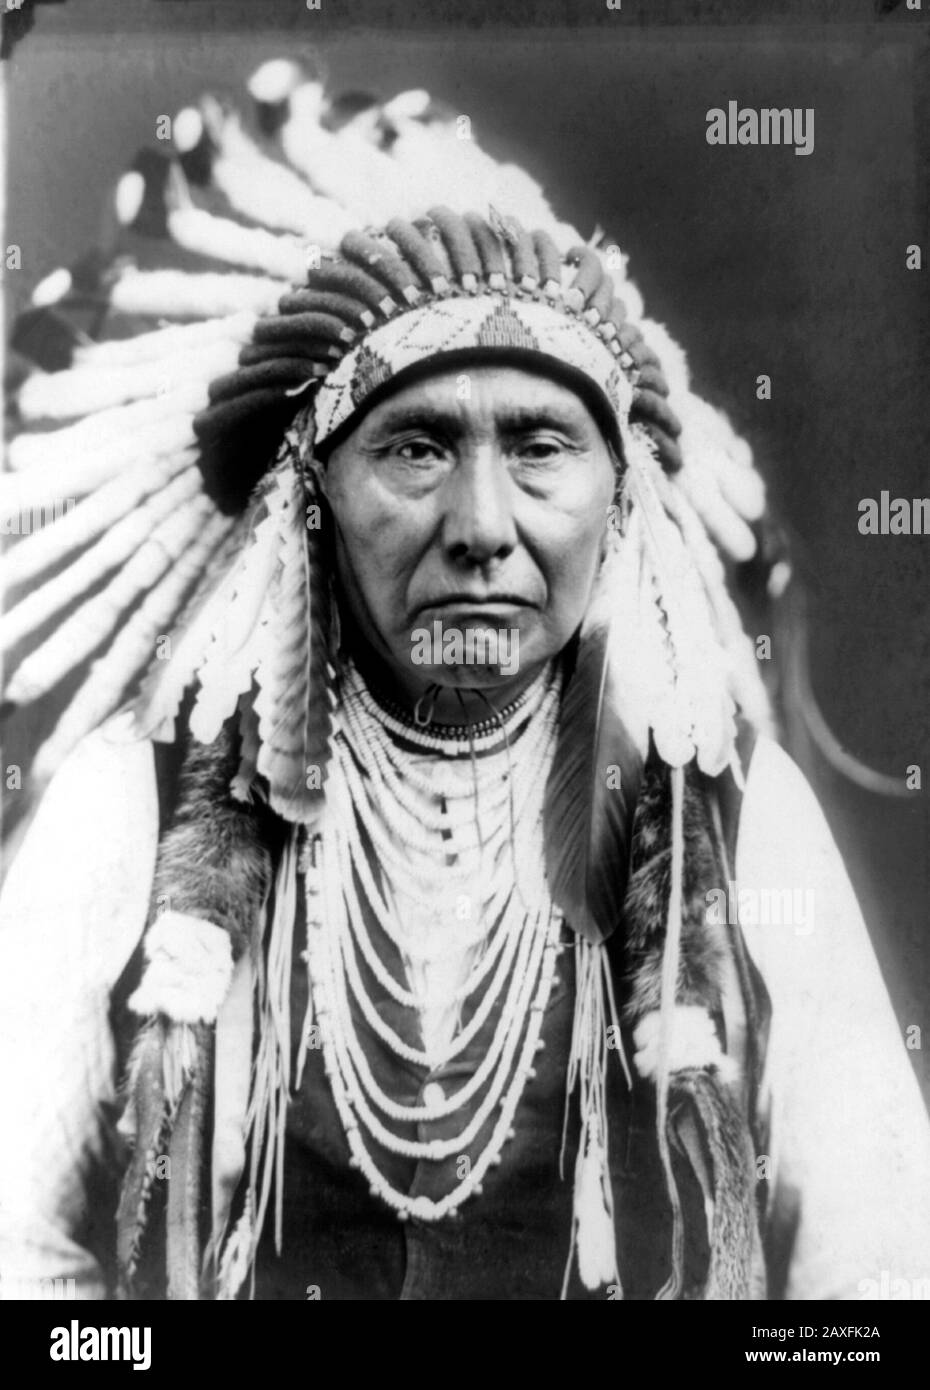 1903, USA :  Native American CHIEF  Joseph of Nez Perce' ( 1840 - 1904 ). Photo by Edward S. CURTIS ( 1868 - 1952 ). - CAPO GIUSEPPE - The North American Indian - HISTORY - foto storiche - warbonnet  - foto storica  -  Indians - INDIANI D' AMERICA - PELLEROSSA - natives americans  - Indians of North America - CAPO TRIBU' INDIANO - GUERRIERO - WARRIOR - portrait - ritratto  - SELVAGGIO WEST - piuma - piume - feathers  - STOCK  © Archivio GBB / Stock Photo